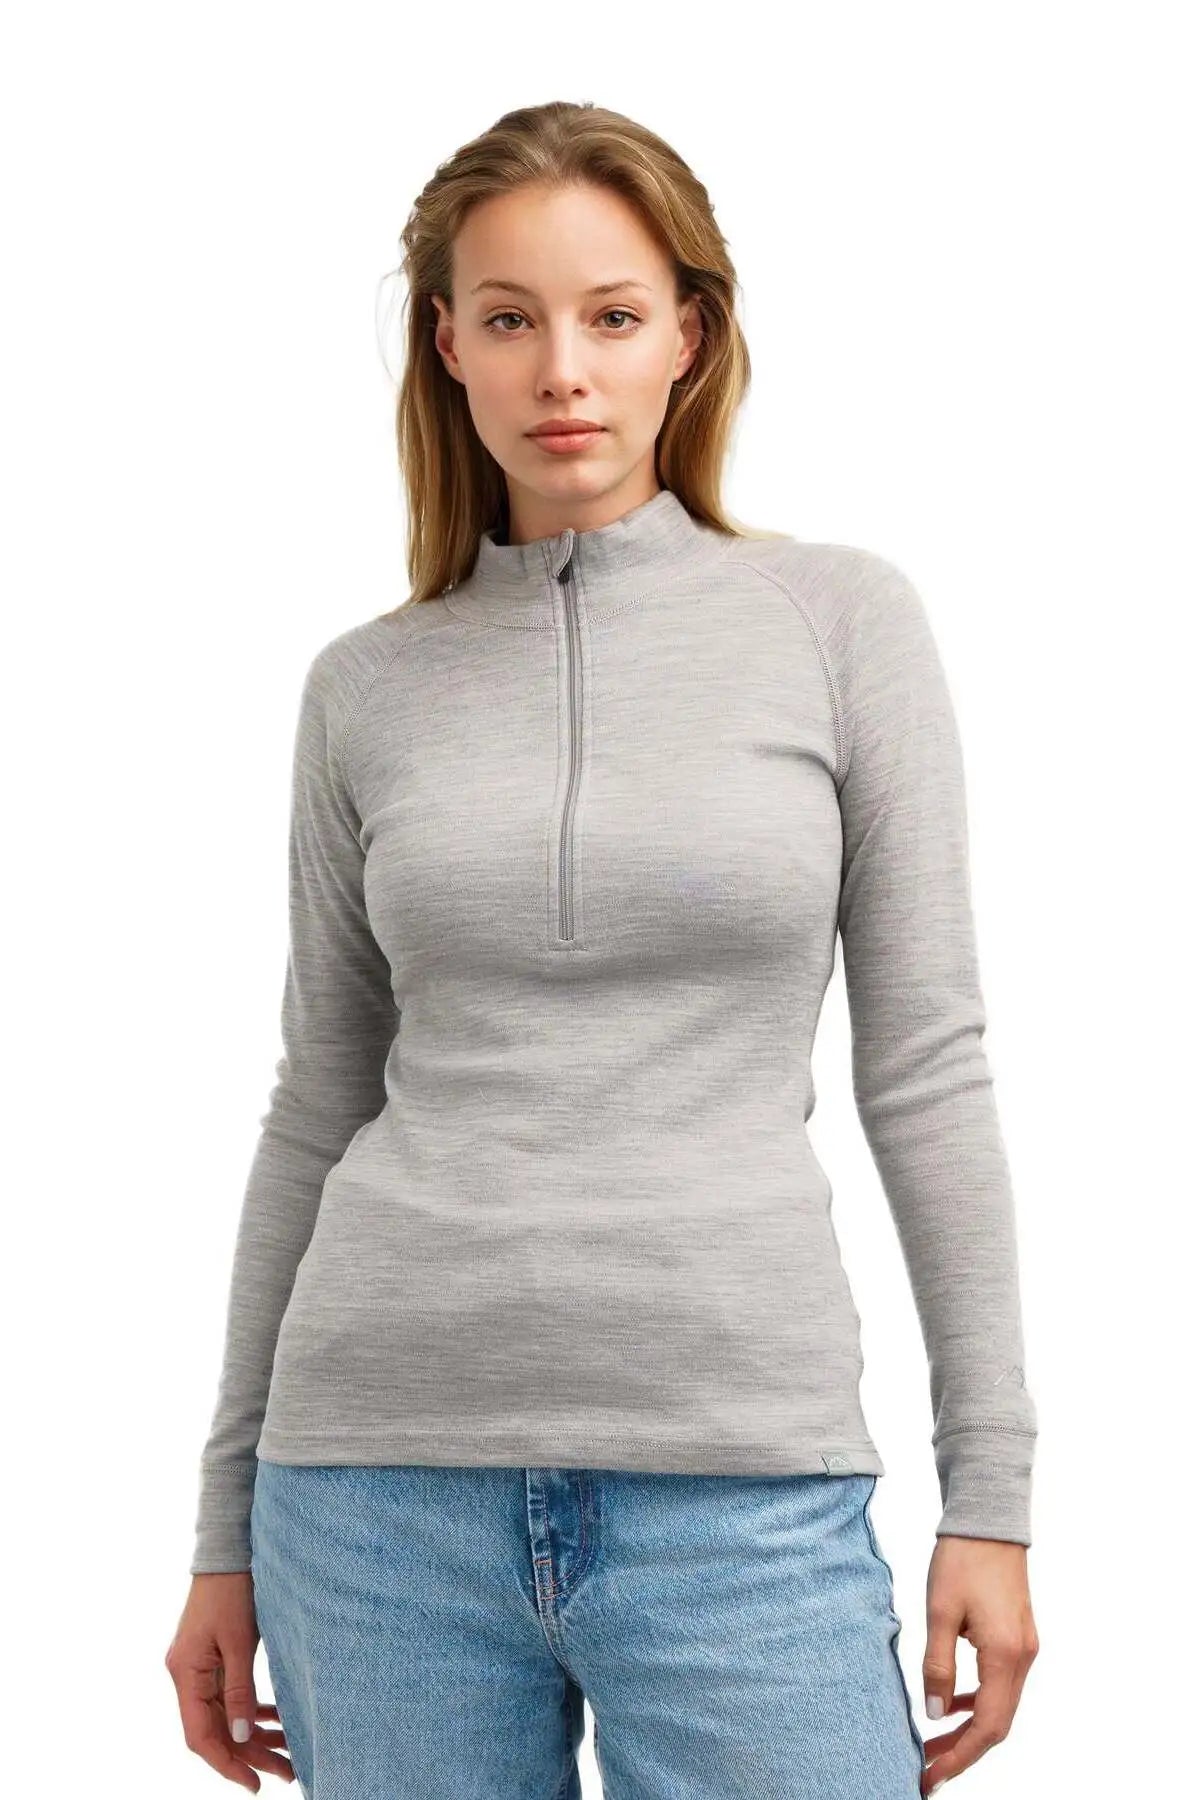 Women's half zip merino wool baselayer